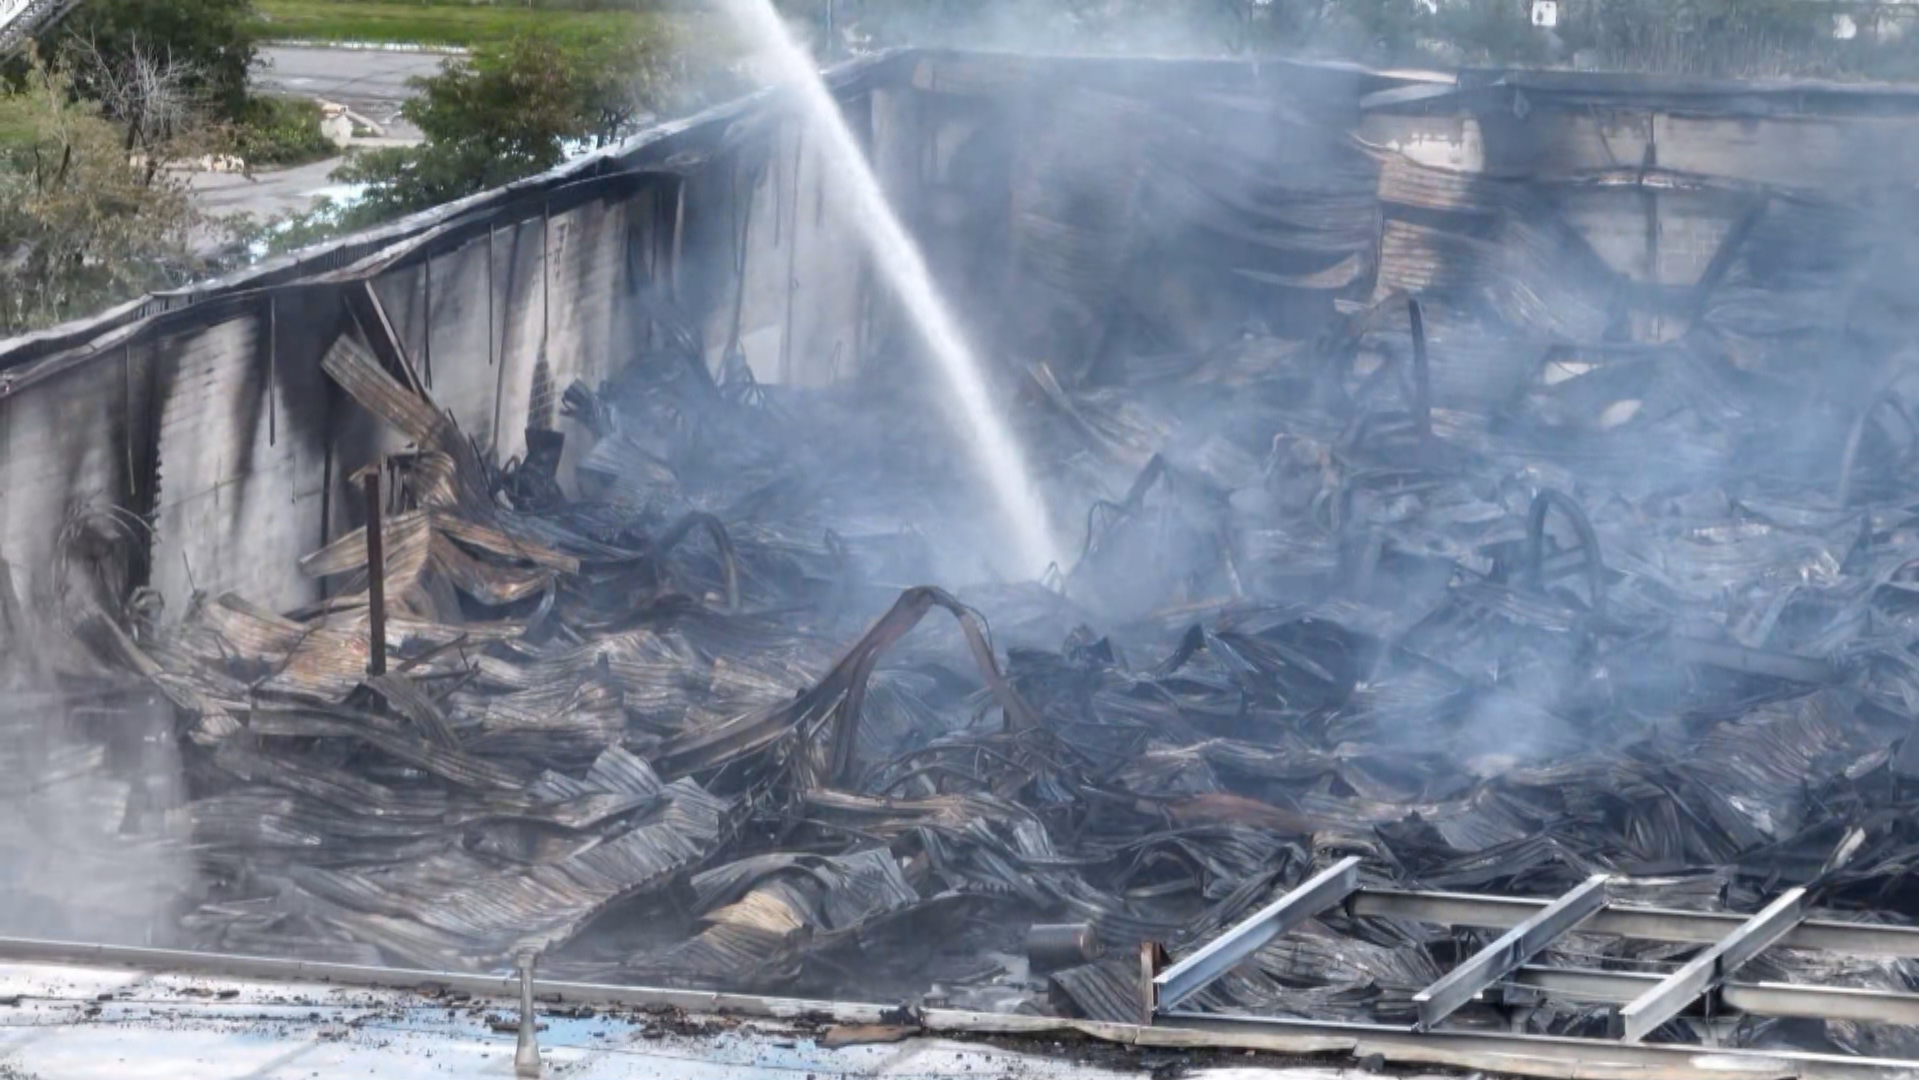 firefighters make good progress battling intense industrial blaze in north toronto